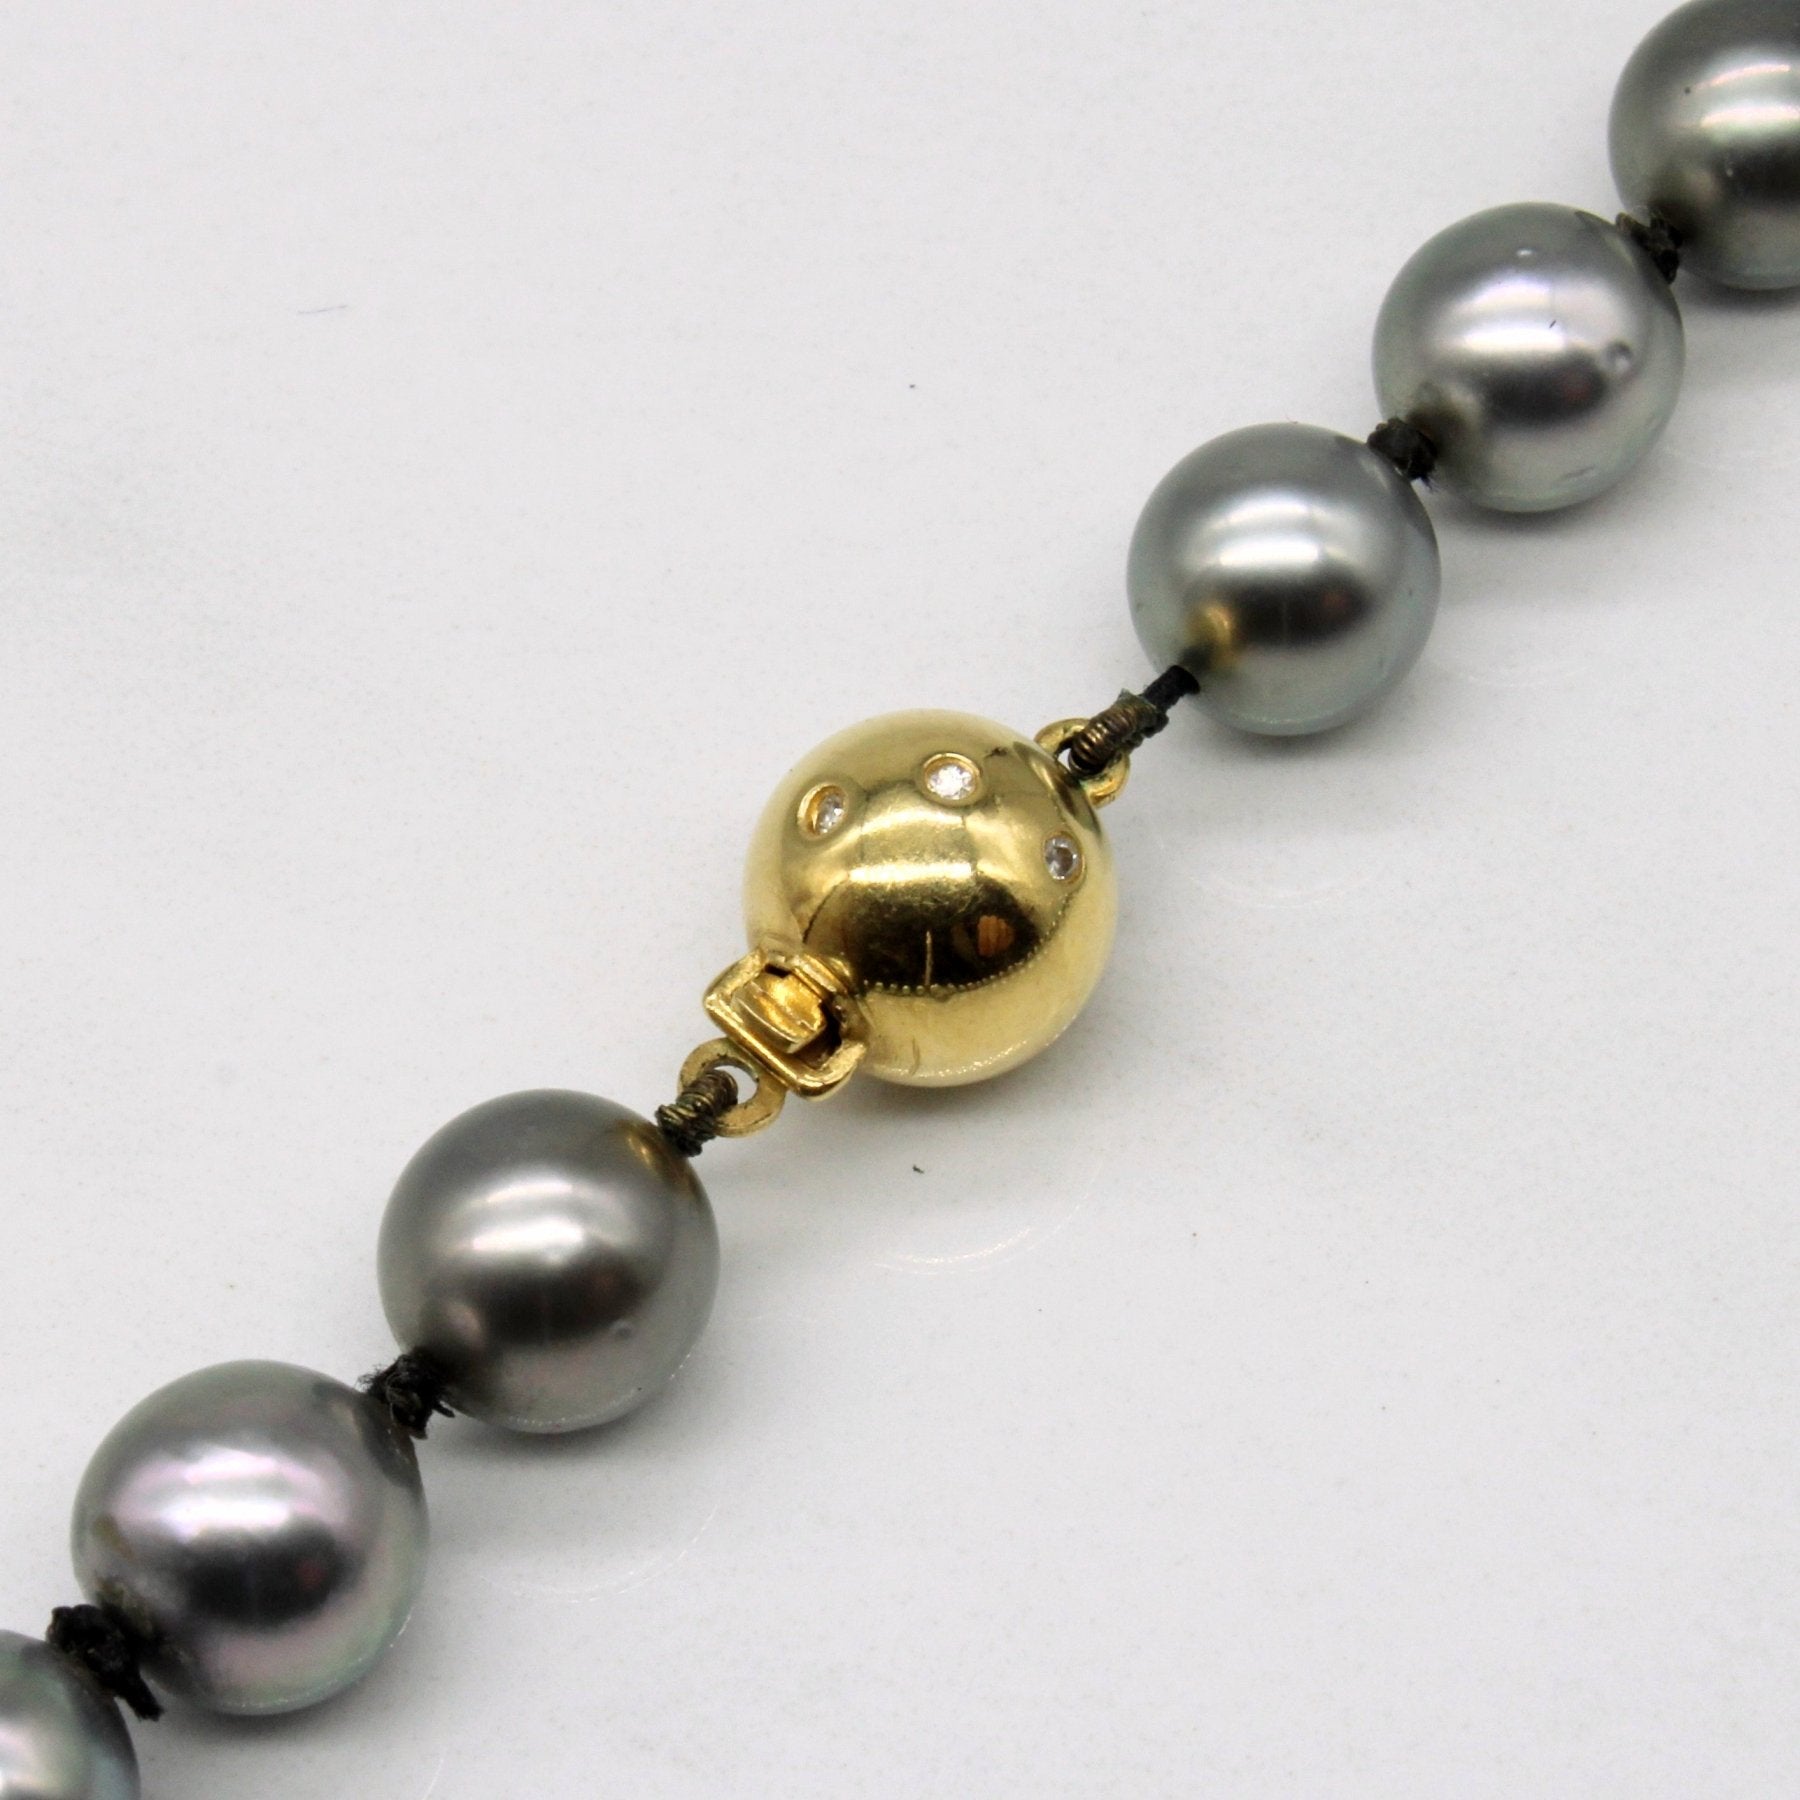 'Birks' Black Pearl & Diamond Necklace | 0.03ctw | 18